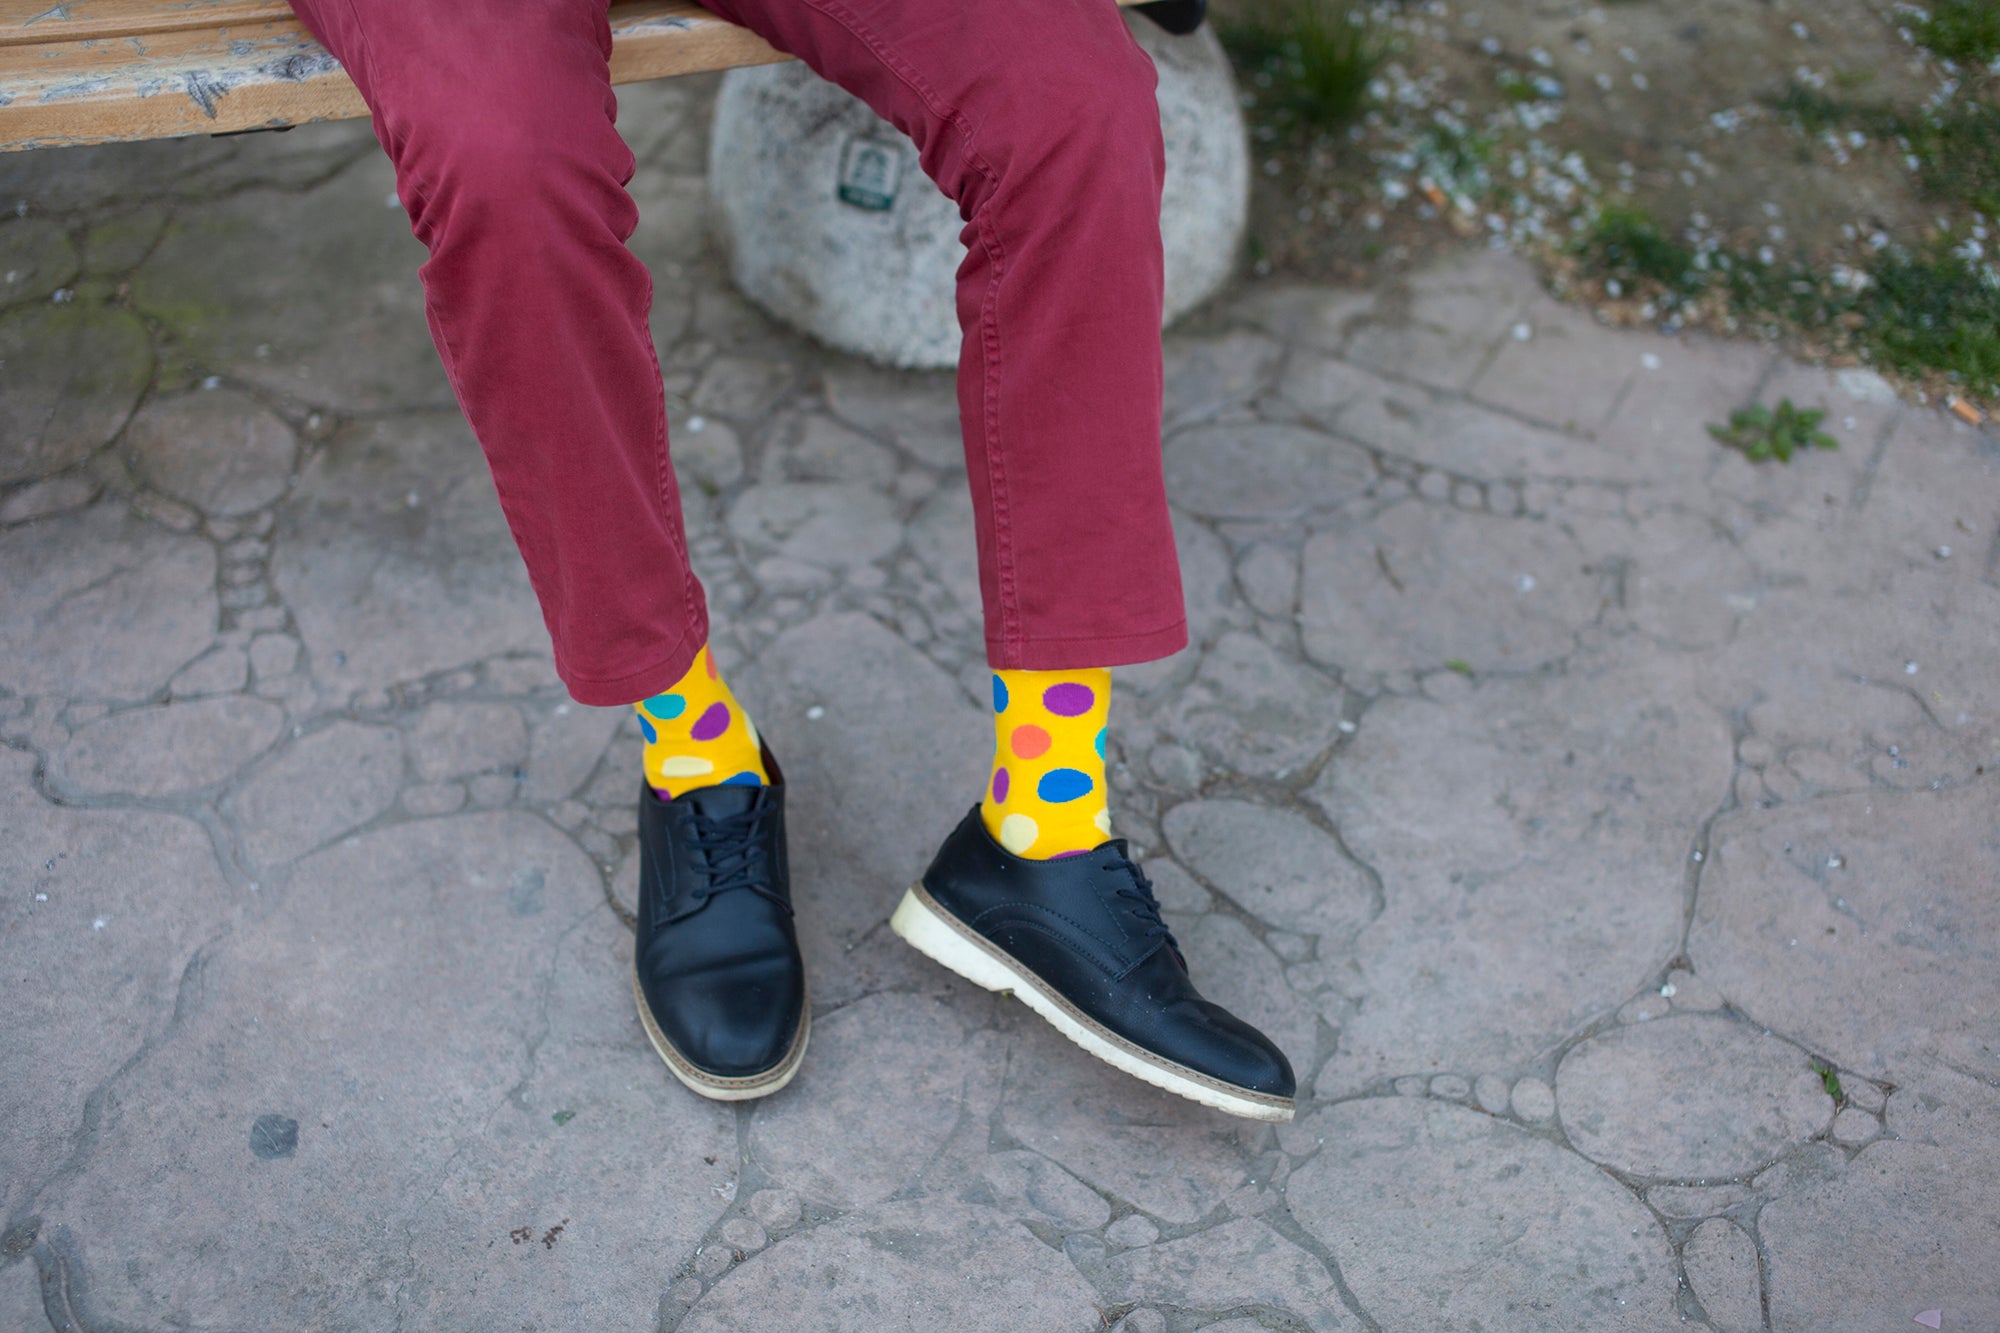 Men's Mixed Yellow Dot Socks